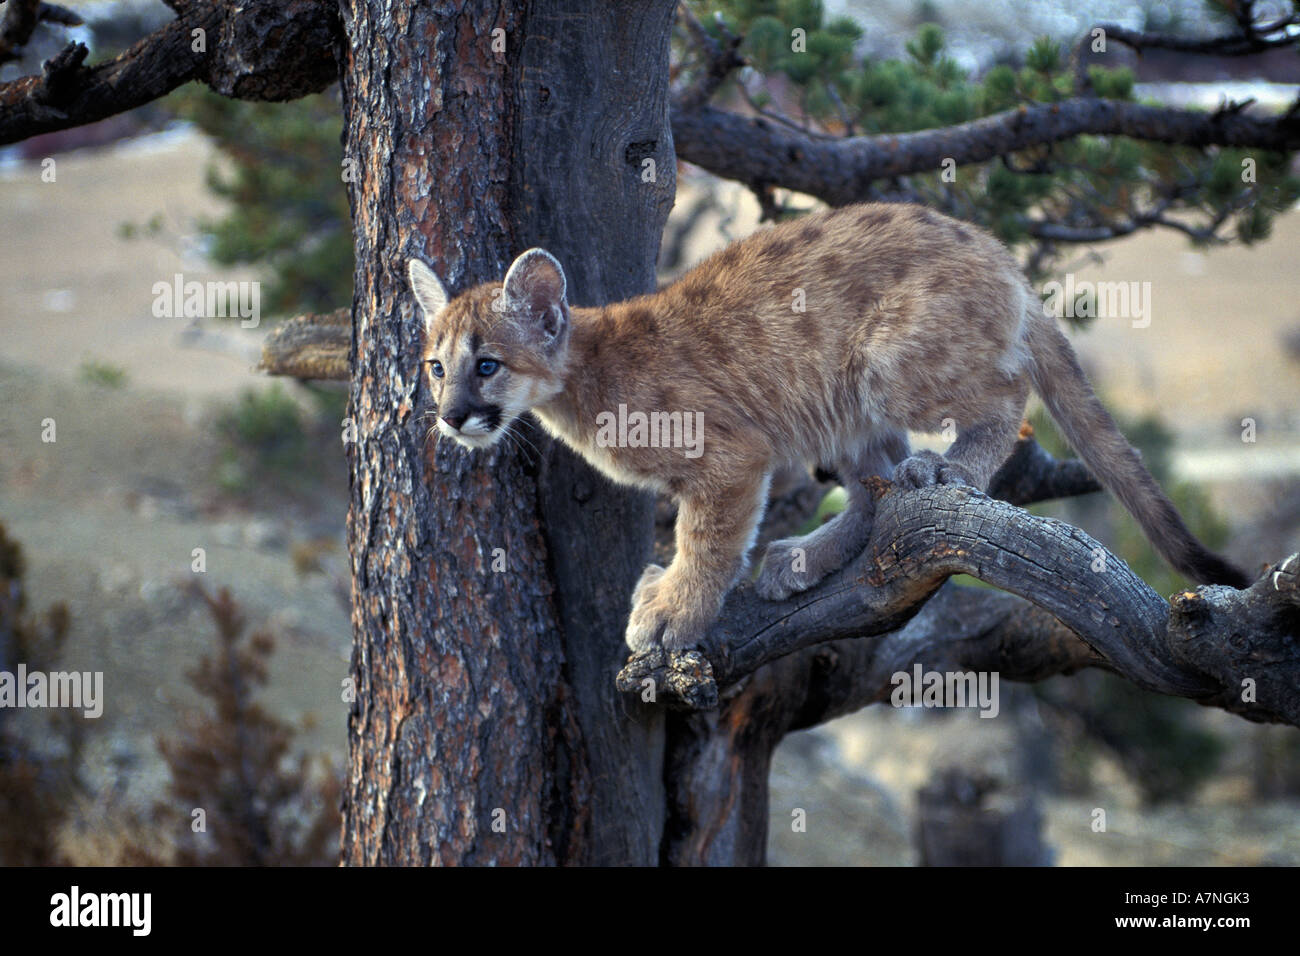 4-month-old-mountain-lion-kitten-in-tree-bridger-mountains-near-bozeman-A7NGK3.jpg